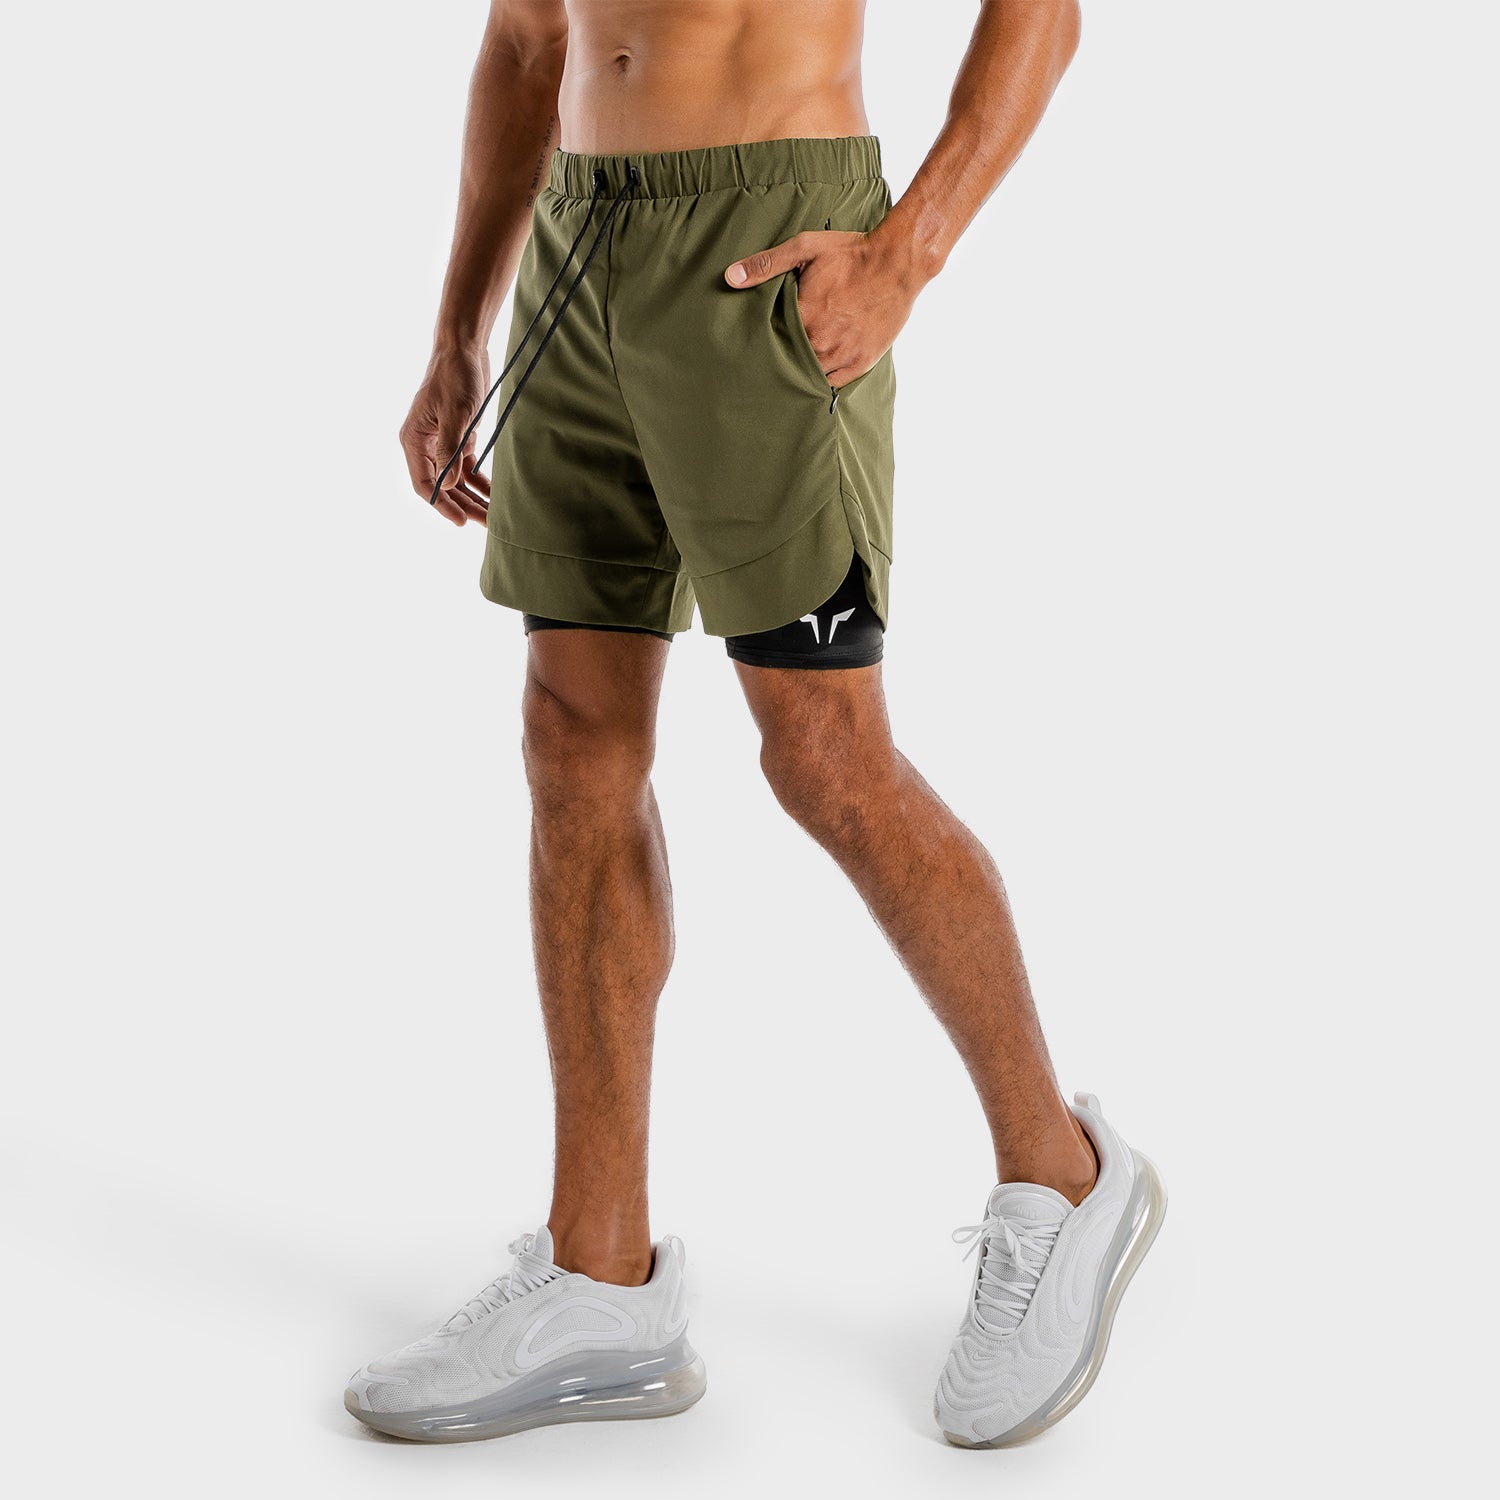 Men's Shorts with Leggings 2-in-1 CAMO KHAKI